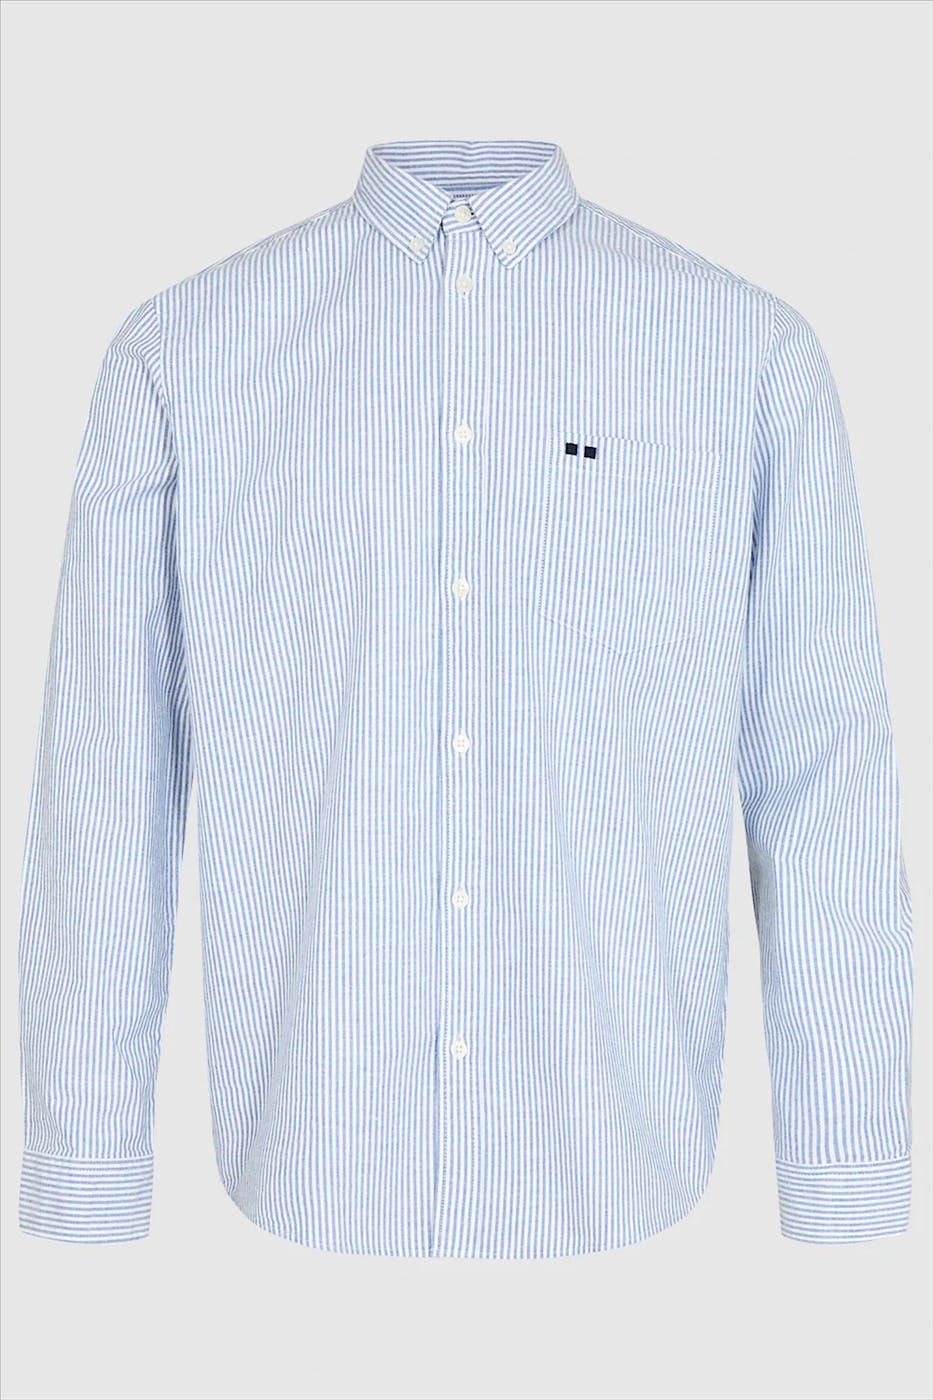 Minimum - Blauw-wit gestreept Harvard hemd